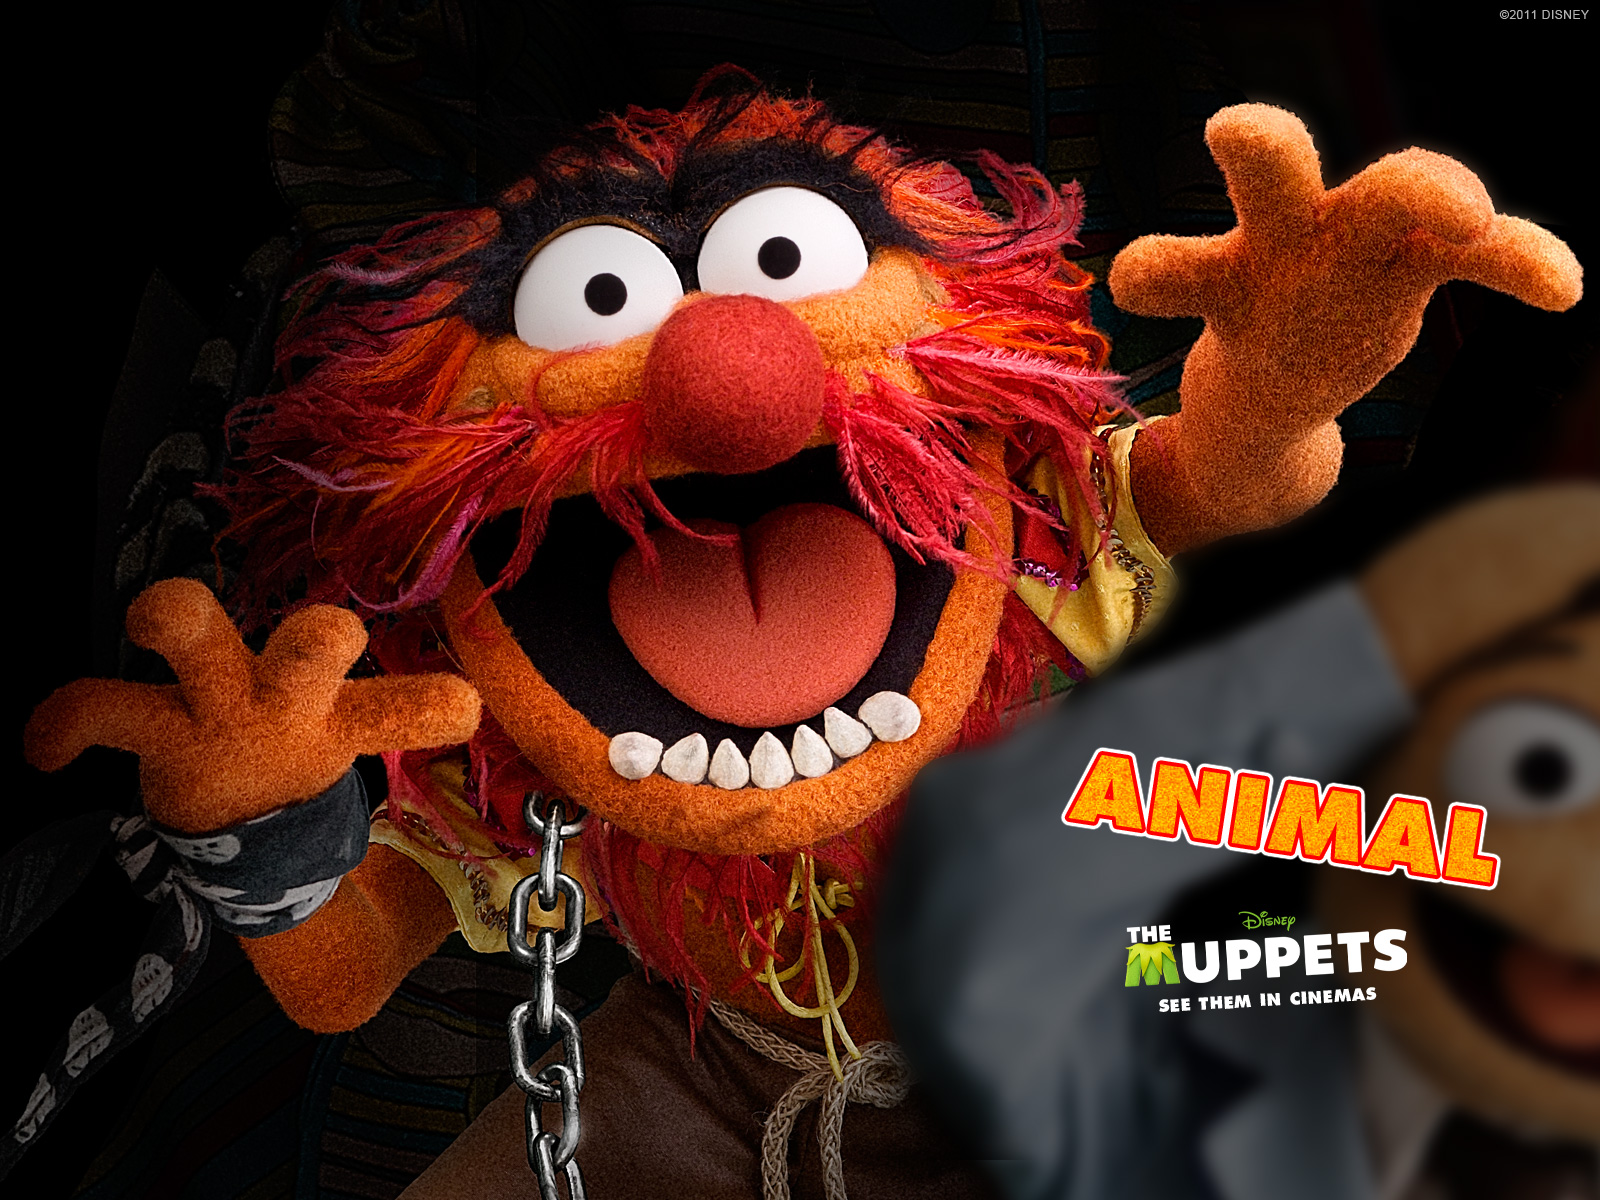 43+] Muppets Animal Wallpaper - WallpaperSafari